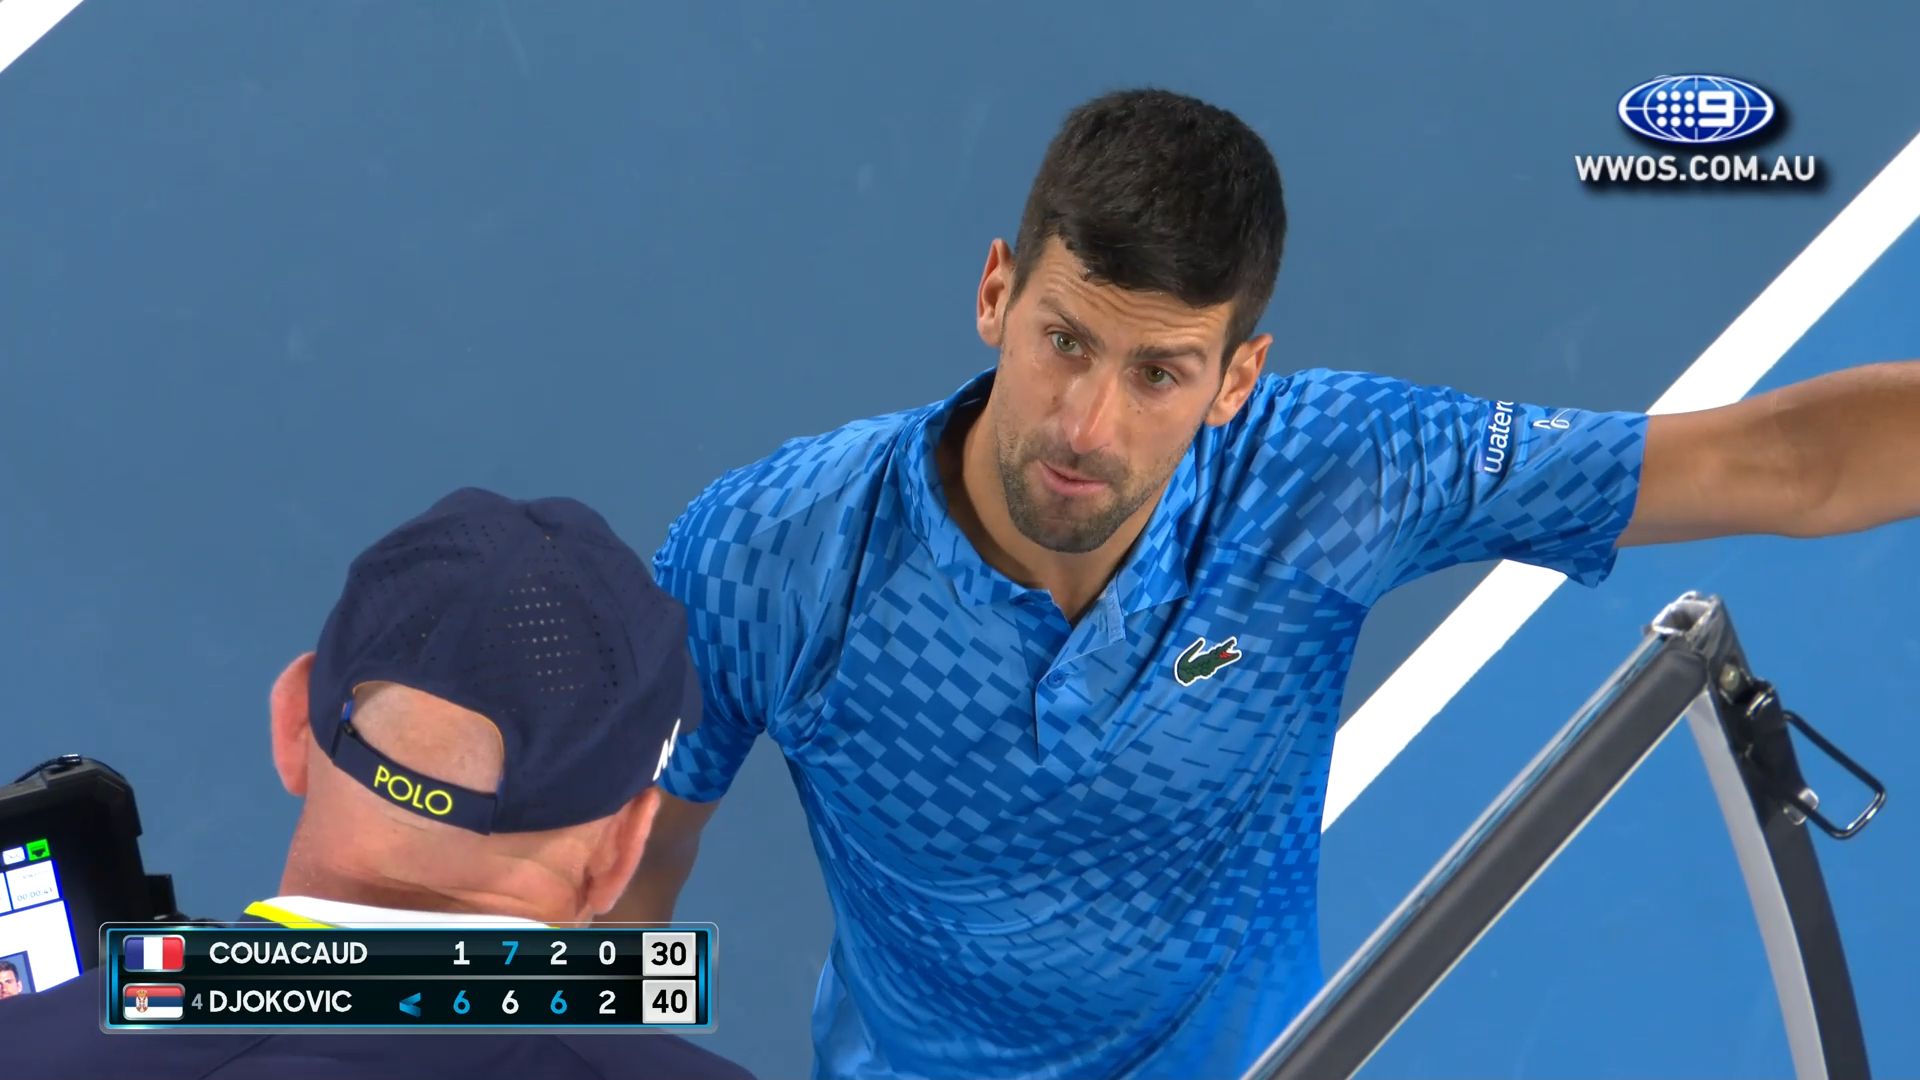 When is Novak Djokovic playing next at the Australian Open?